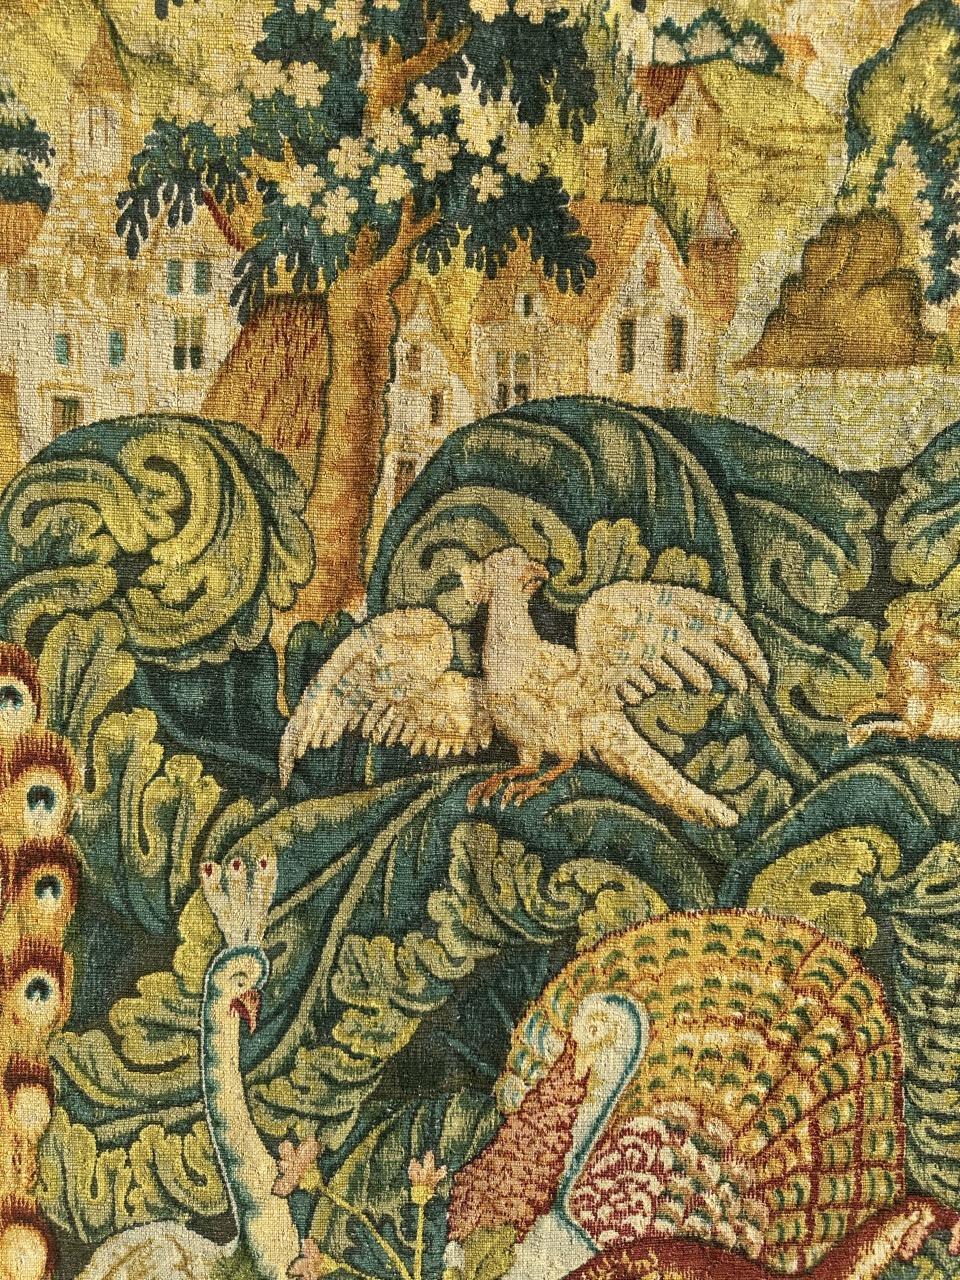 Français Bobyrug's Wonderful Vintage French hand printed Tapestry,  